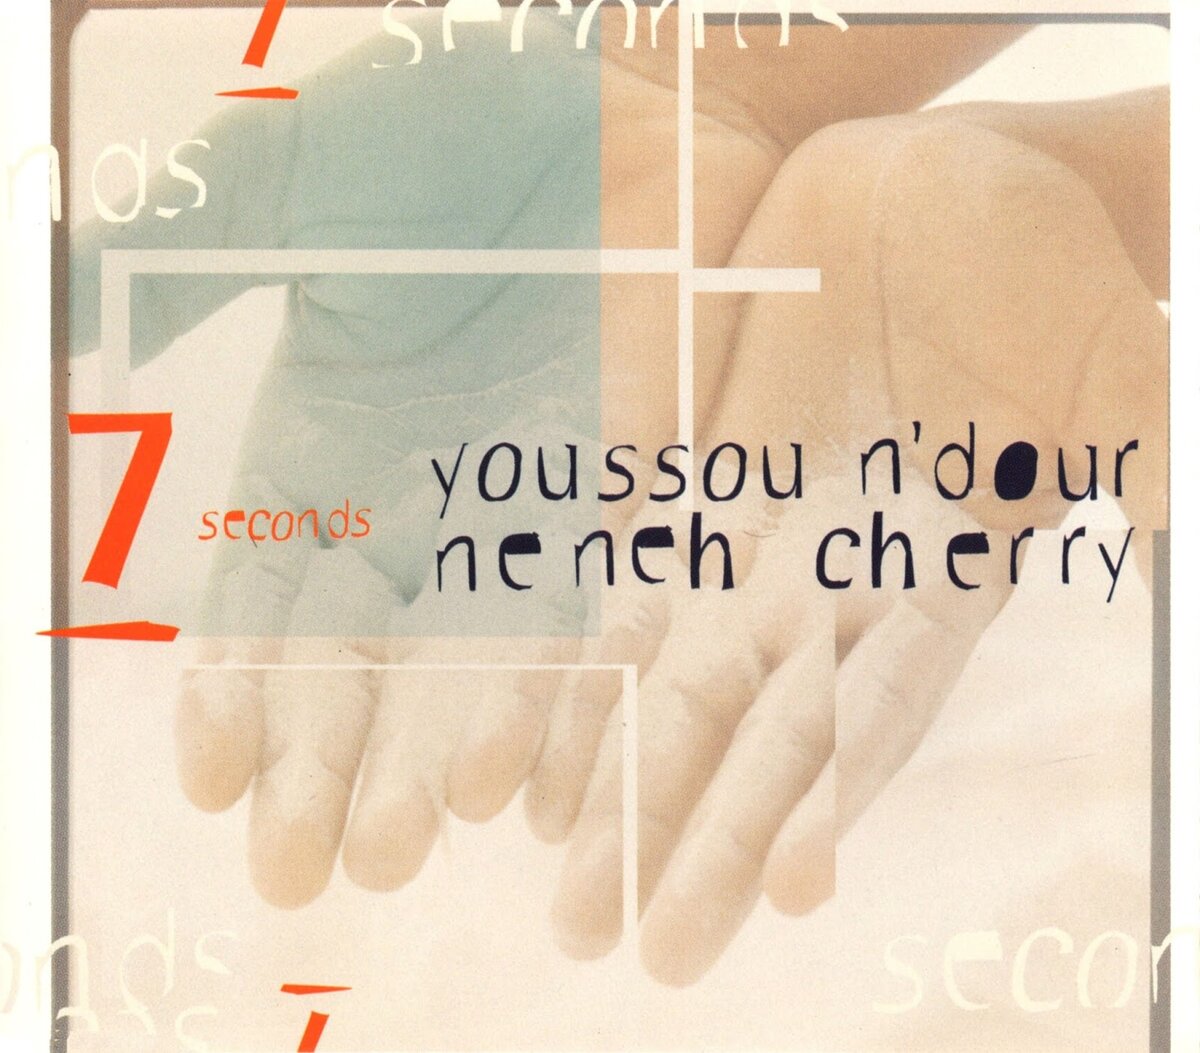 Neneh cherry youssou n dour 7 seconds. 7 Seconds Юссу н’дур. Youssou n'Dour 7 seconds. Youssou n Dour Neneh Cherry 7 seconds. Neneh Cherry(feat. Youssou n'Dour) - 7 seconds..